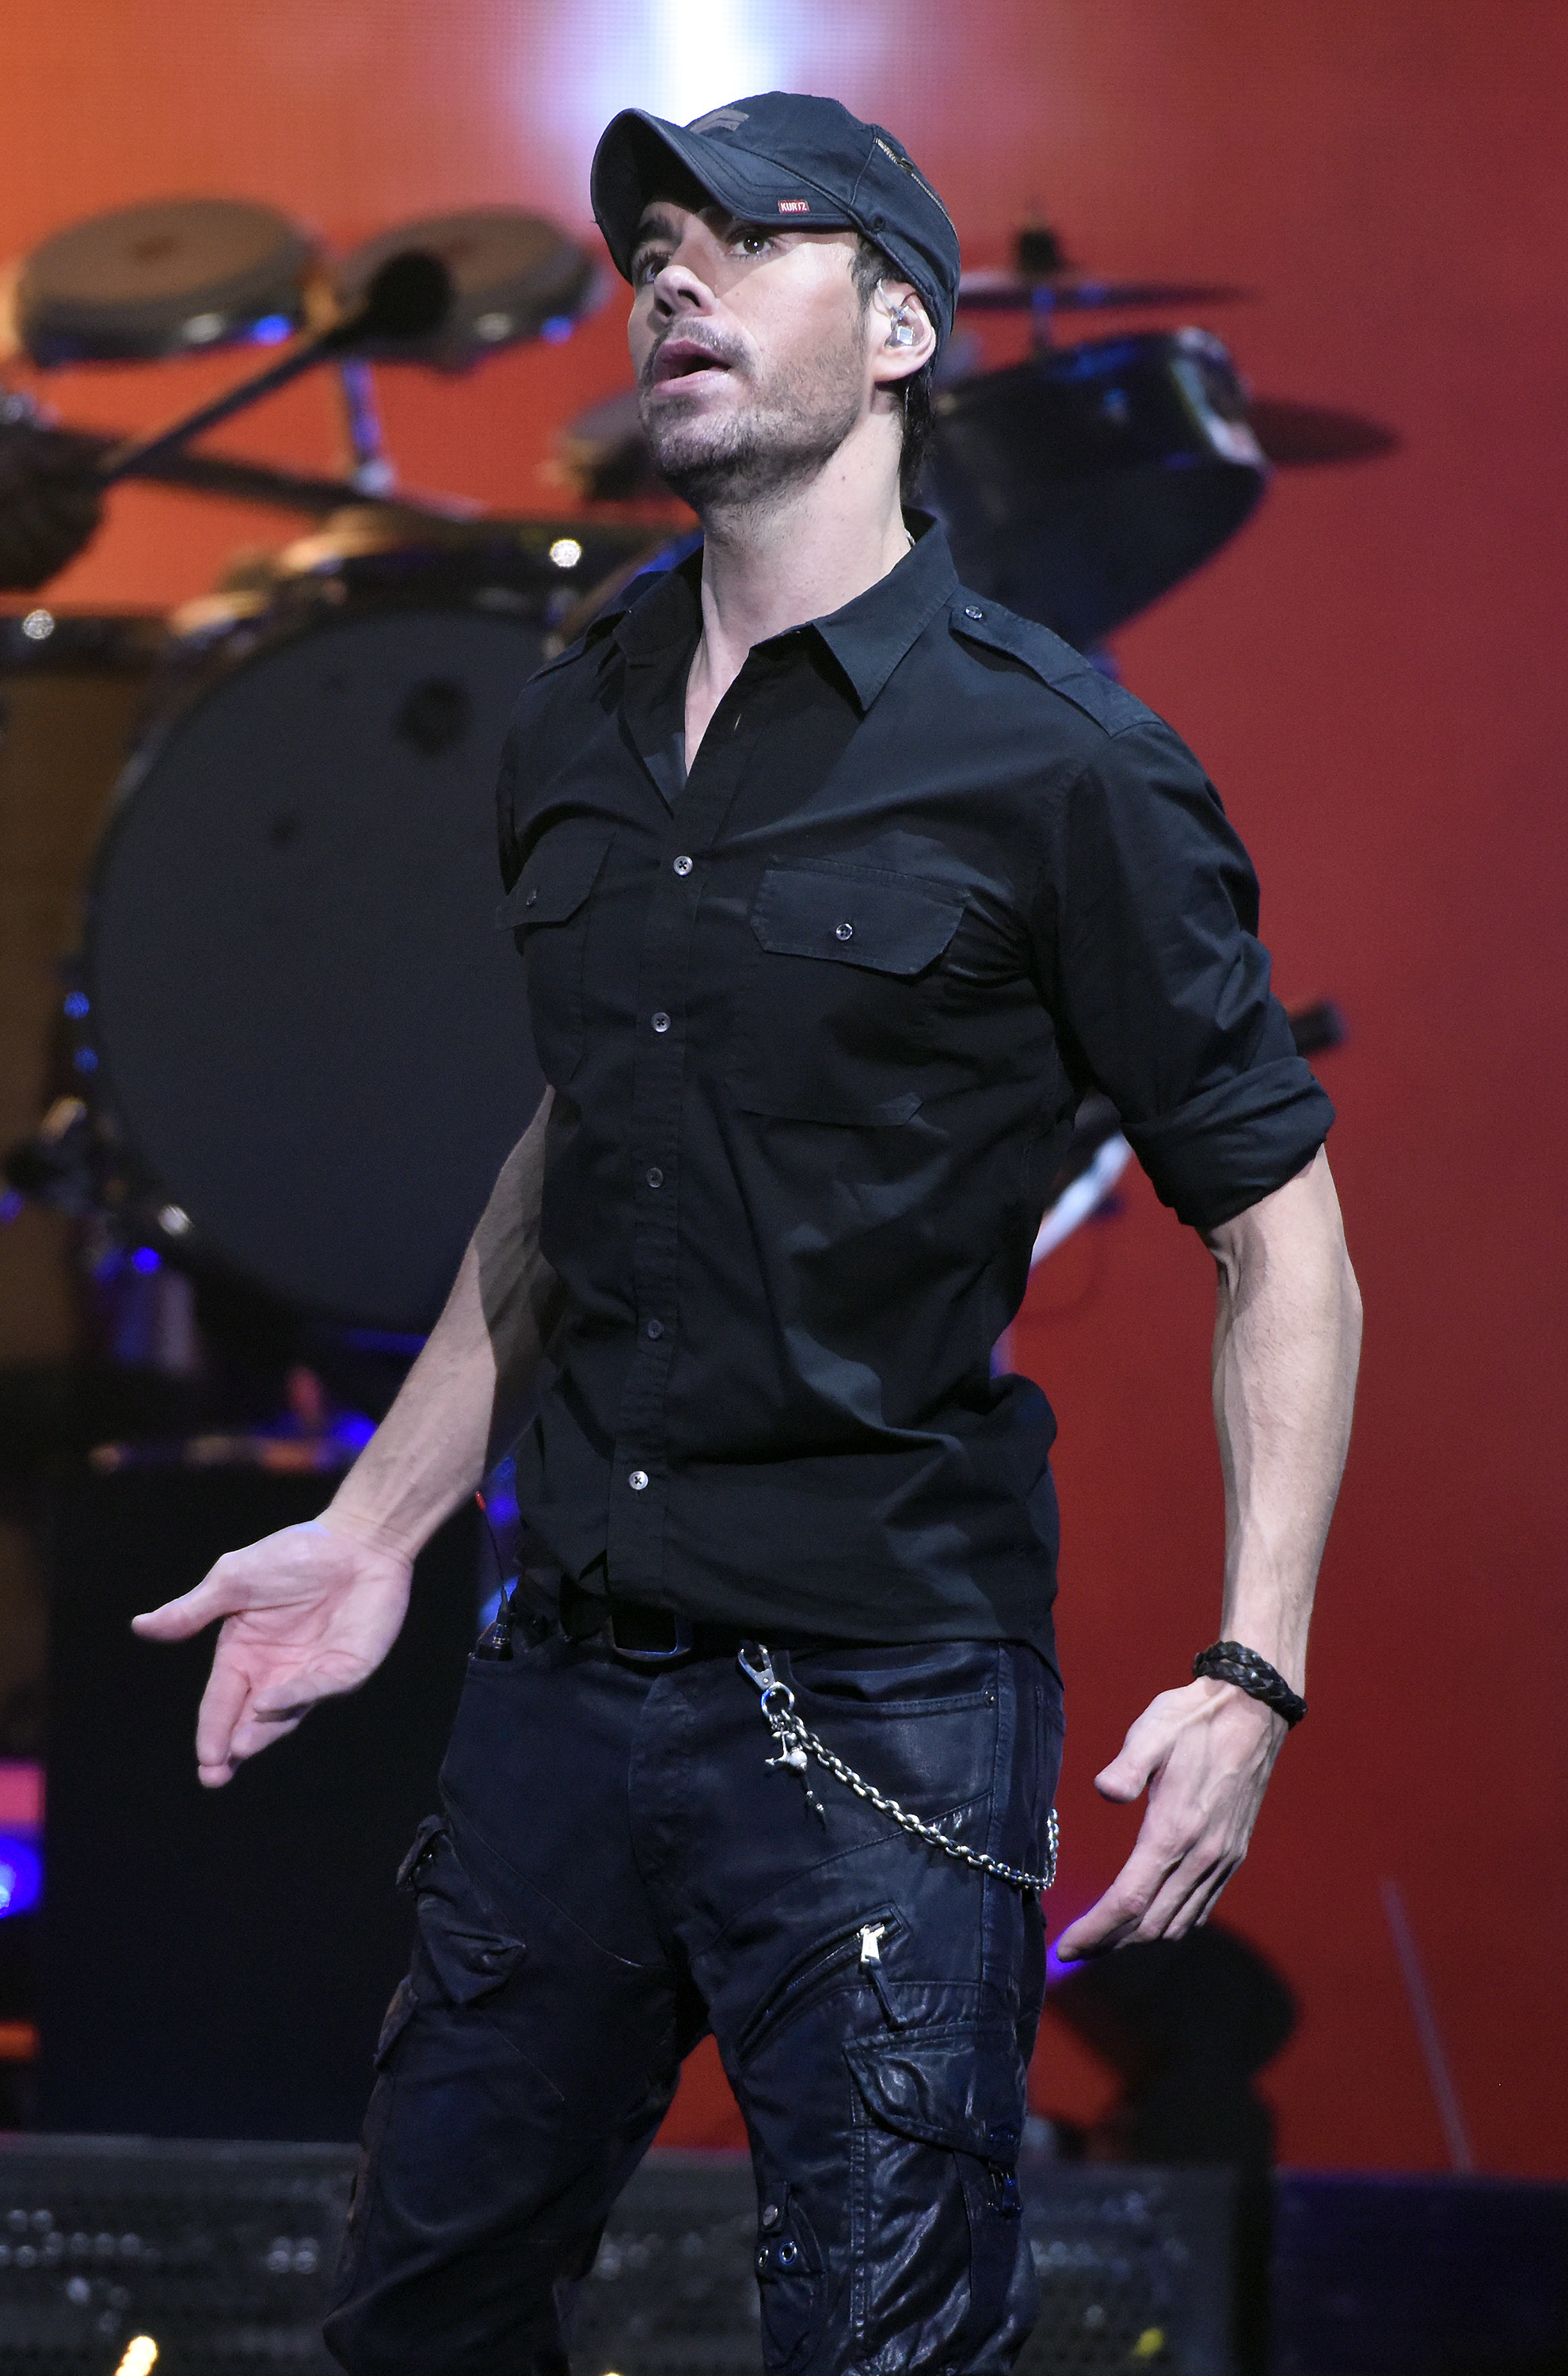 Enrique Iglesias performing on stage